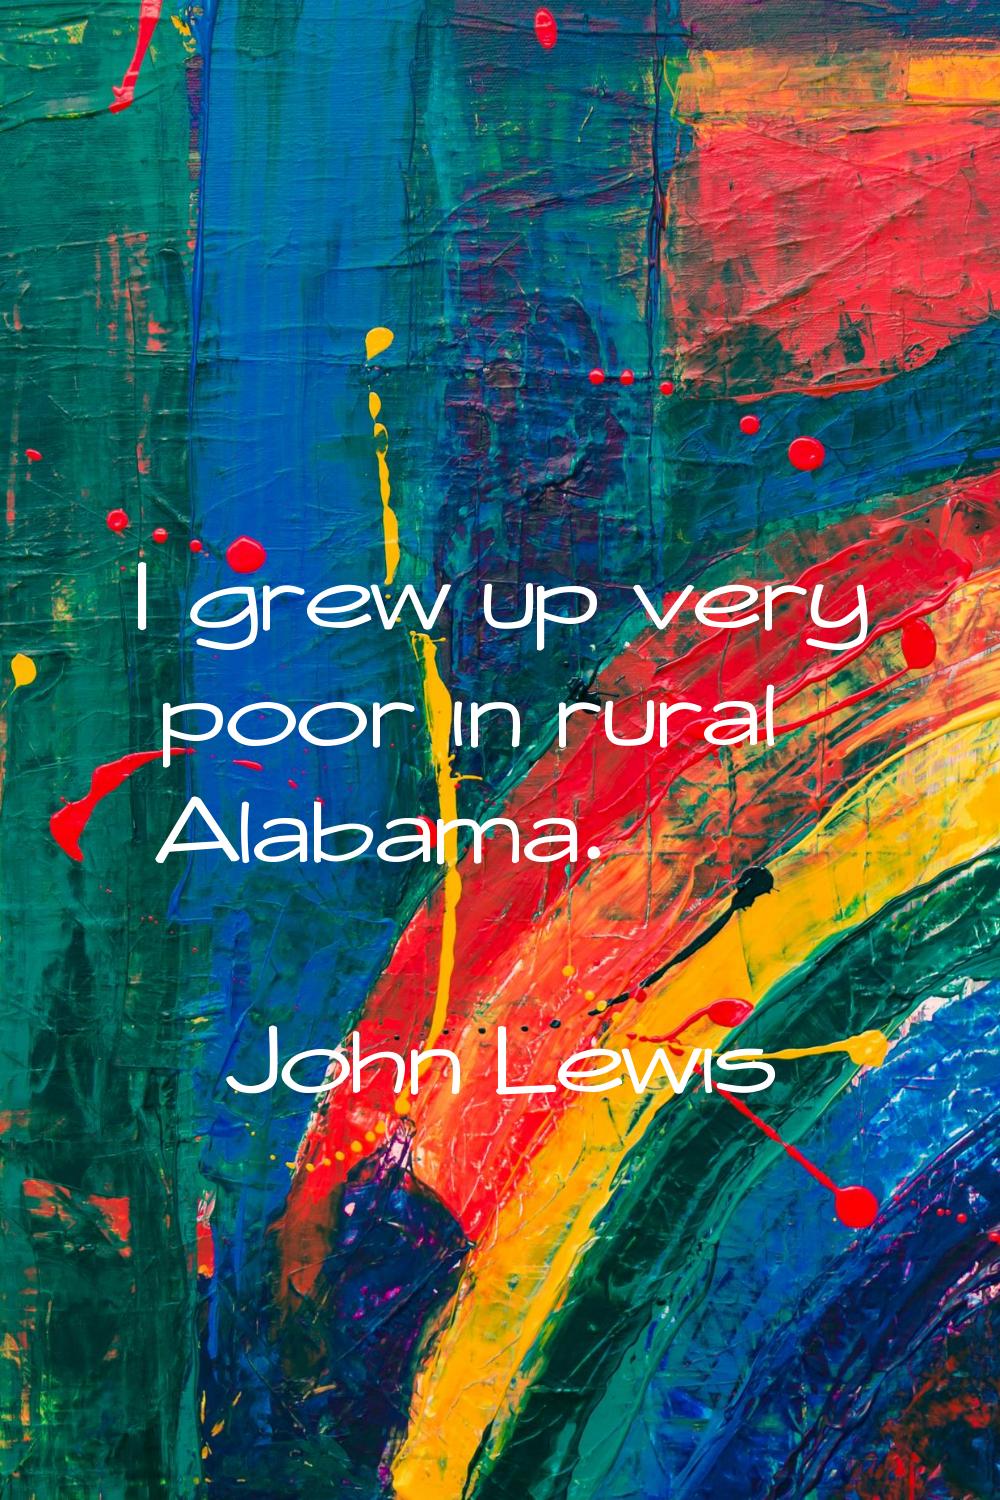 I grew up very poor in rural Alabama.